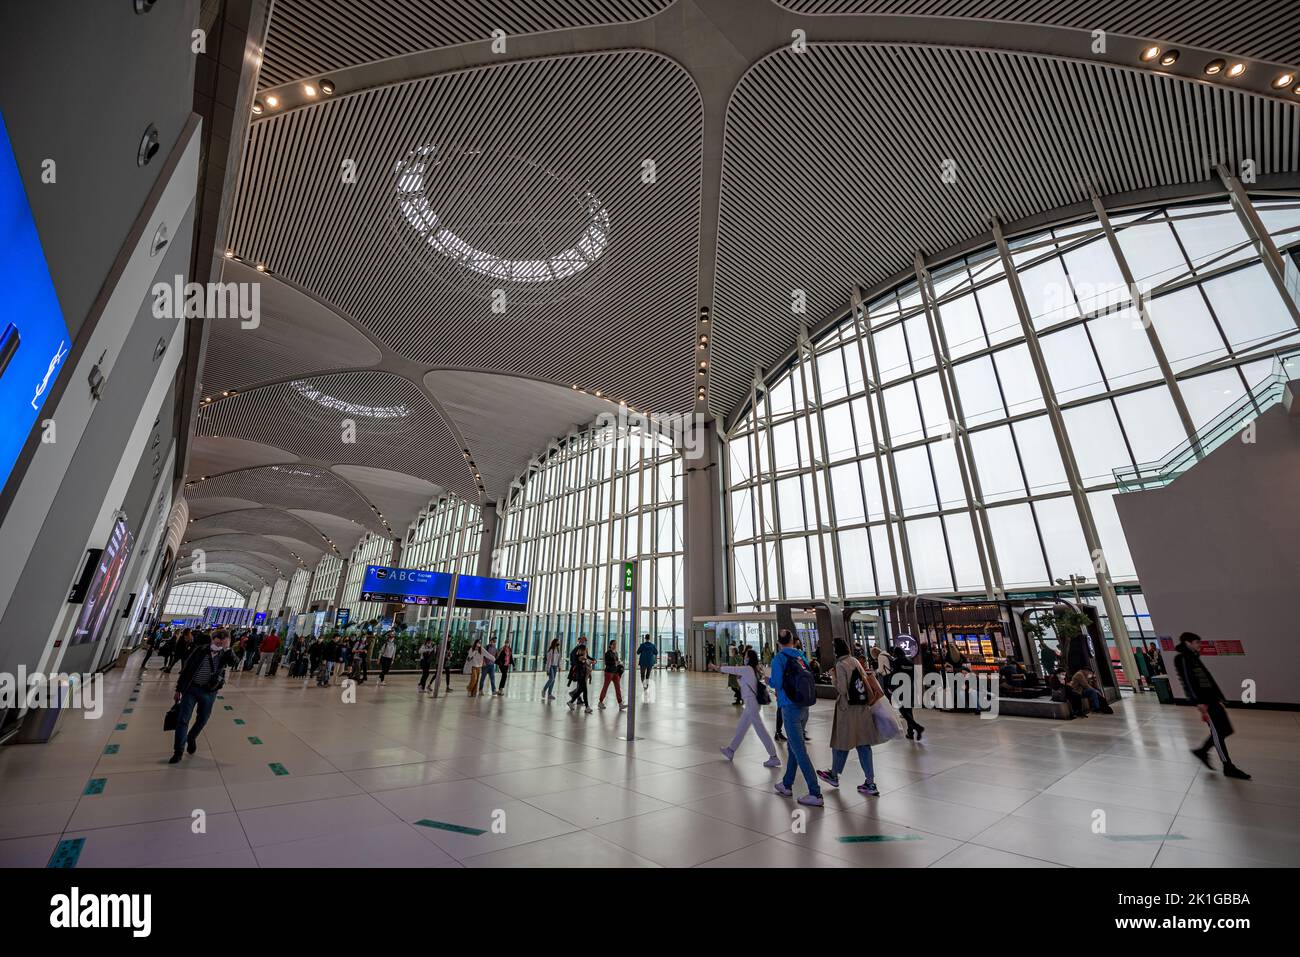 Architectural interiors, Instanbul Airport, Turkey Stock Photo